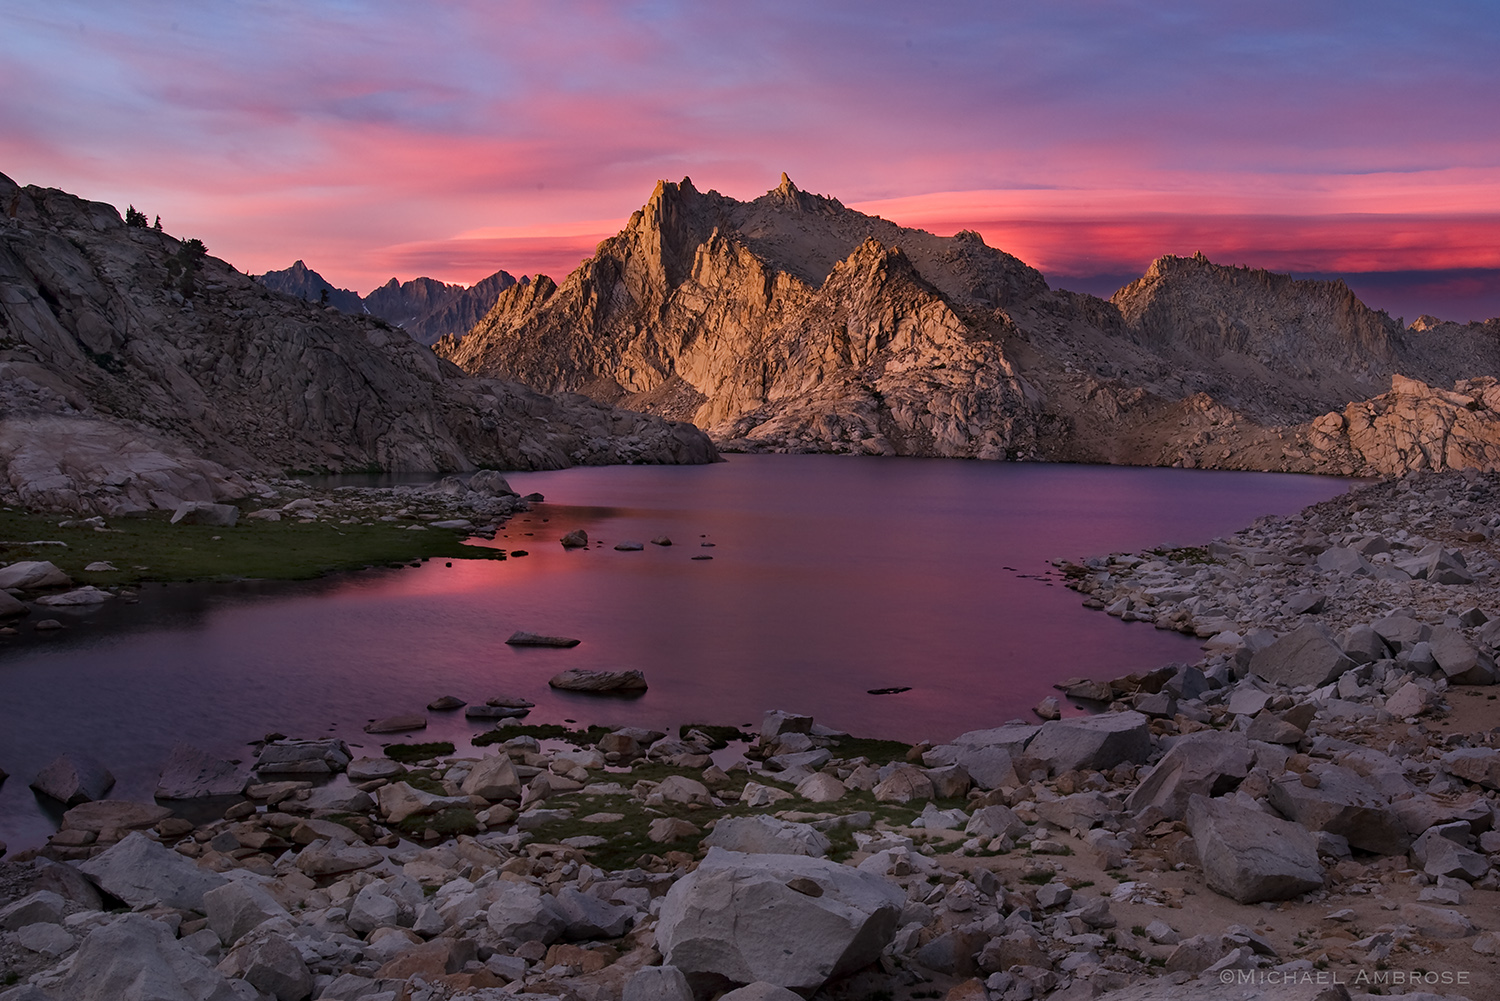 Pink sunset light illuminates Colombine Lake and the Sierra Nevada range in Sequoia National Park, California.